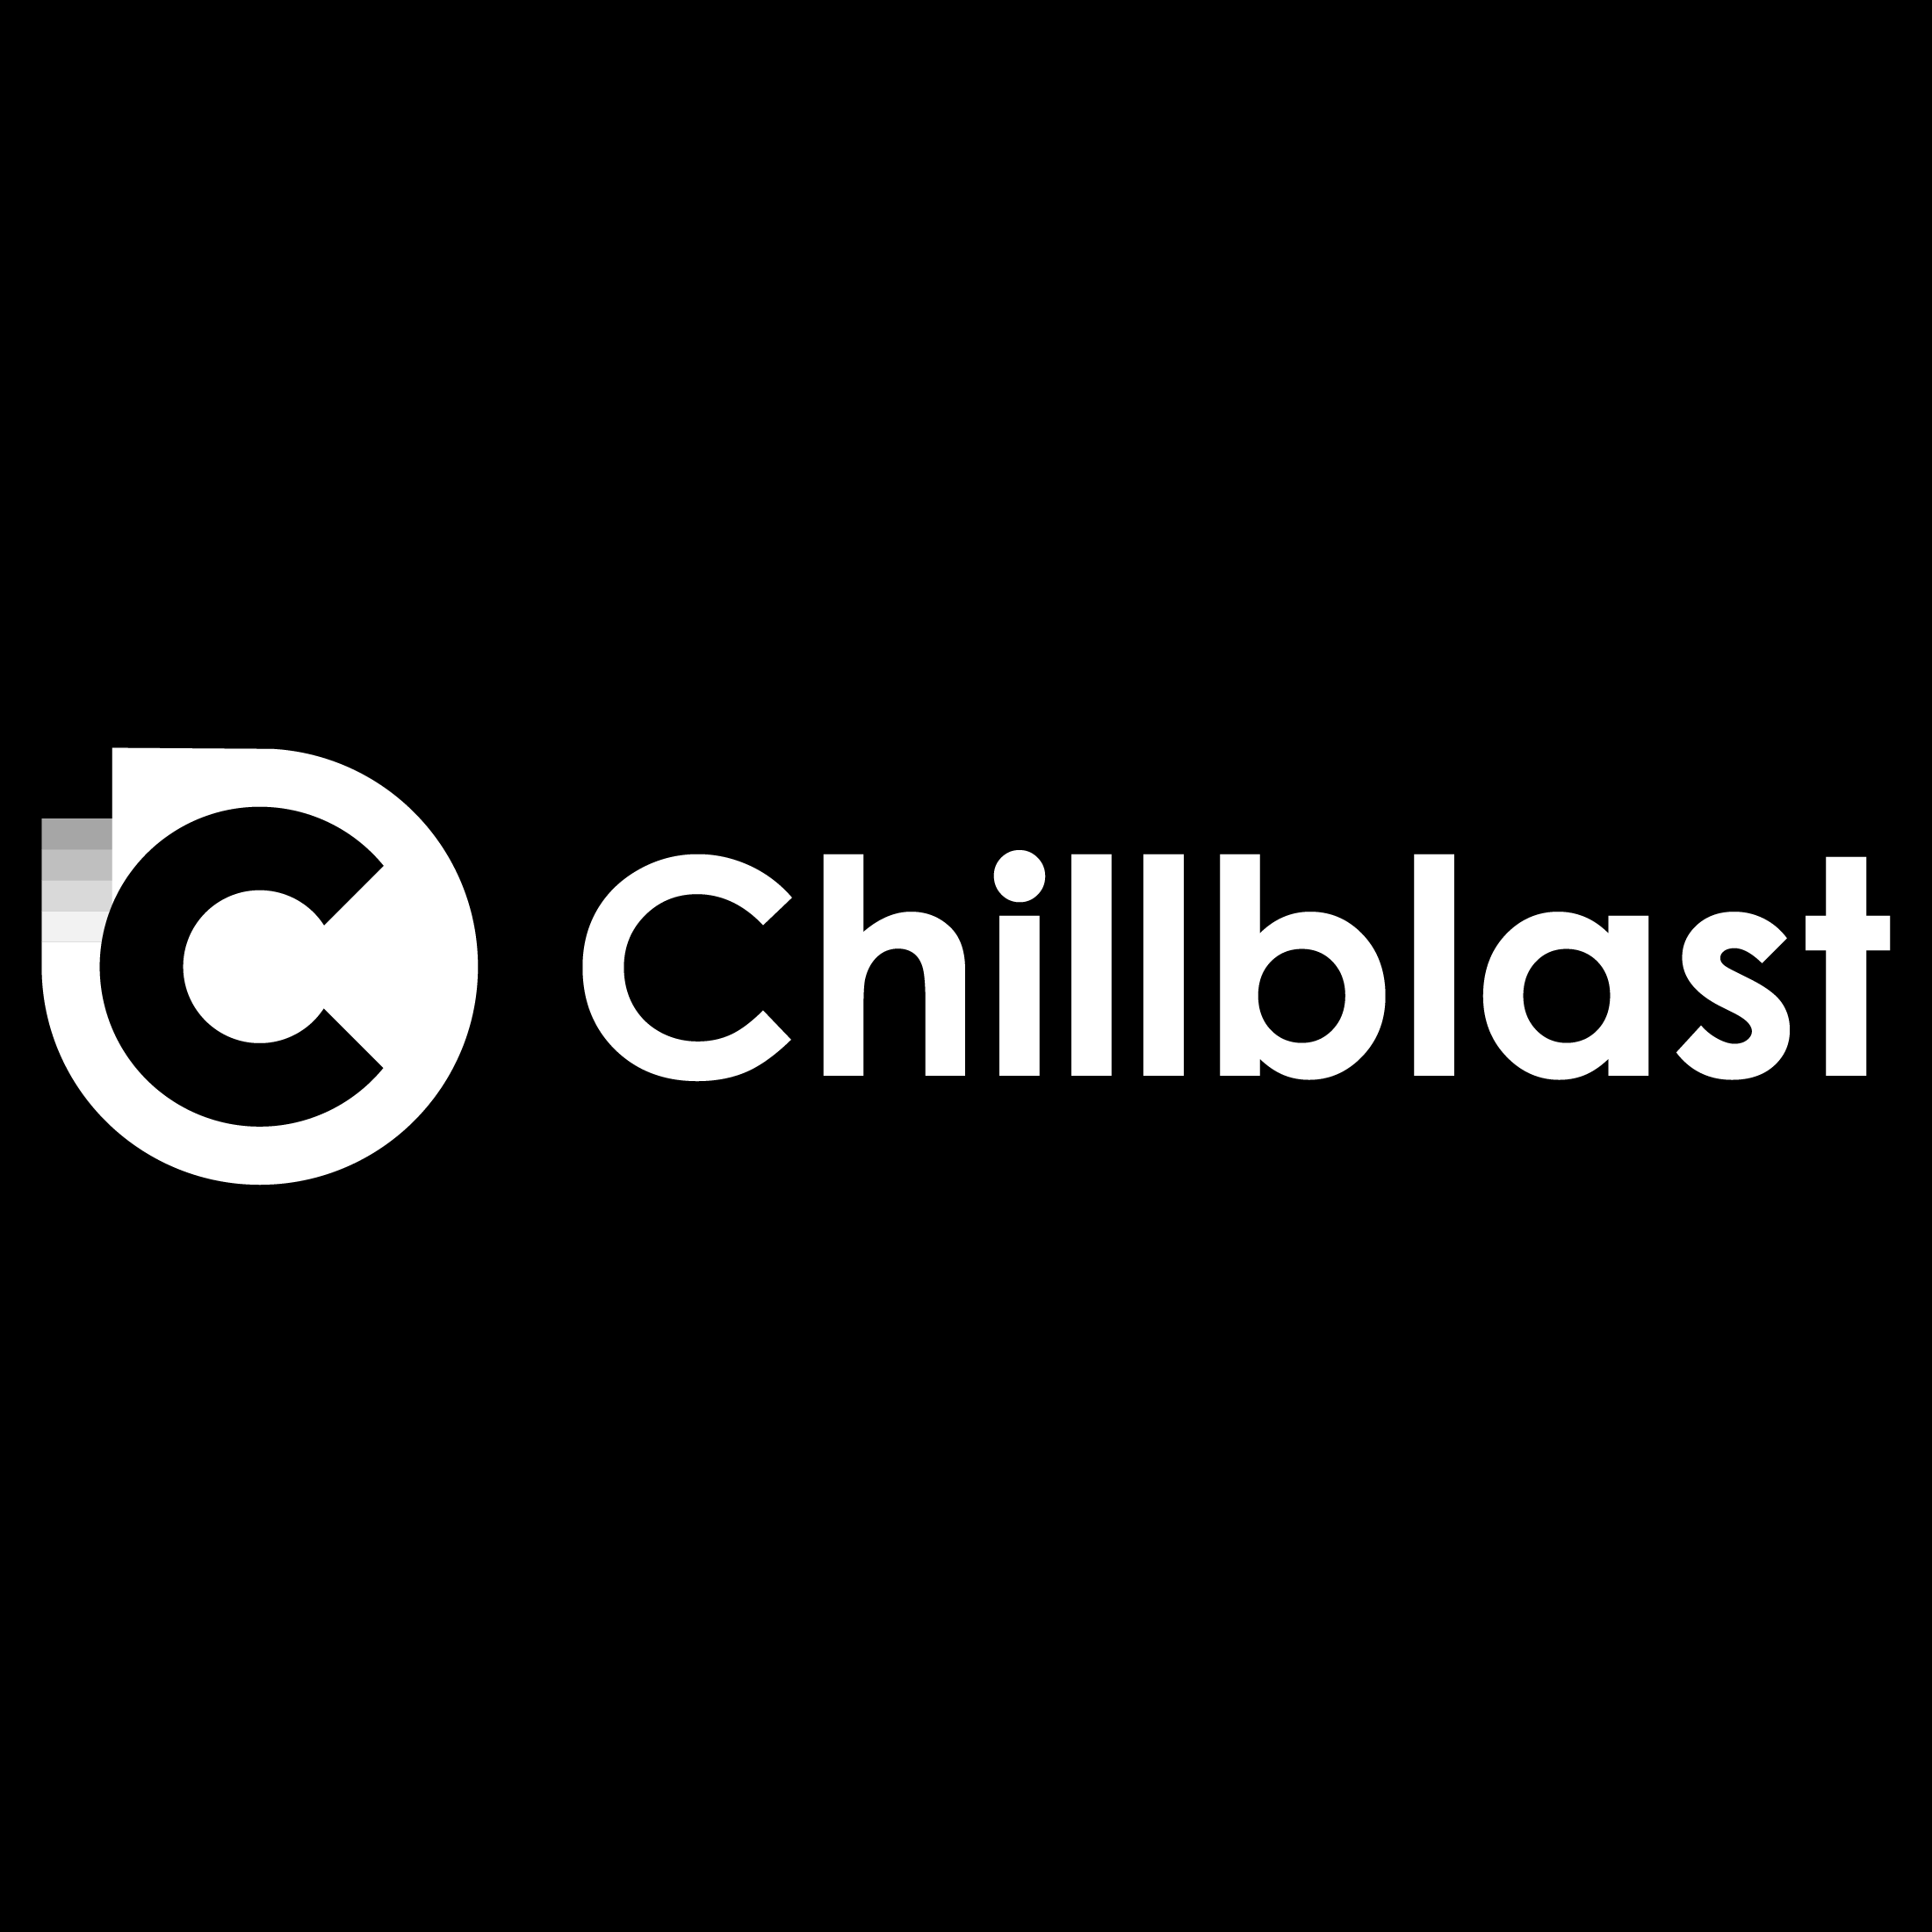 Chillblast Coupons & Promo Codes